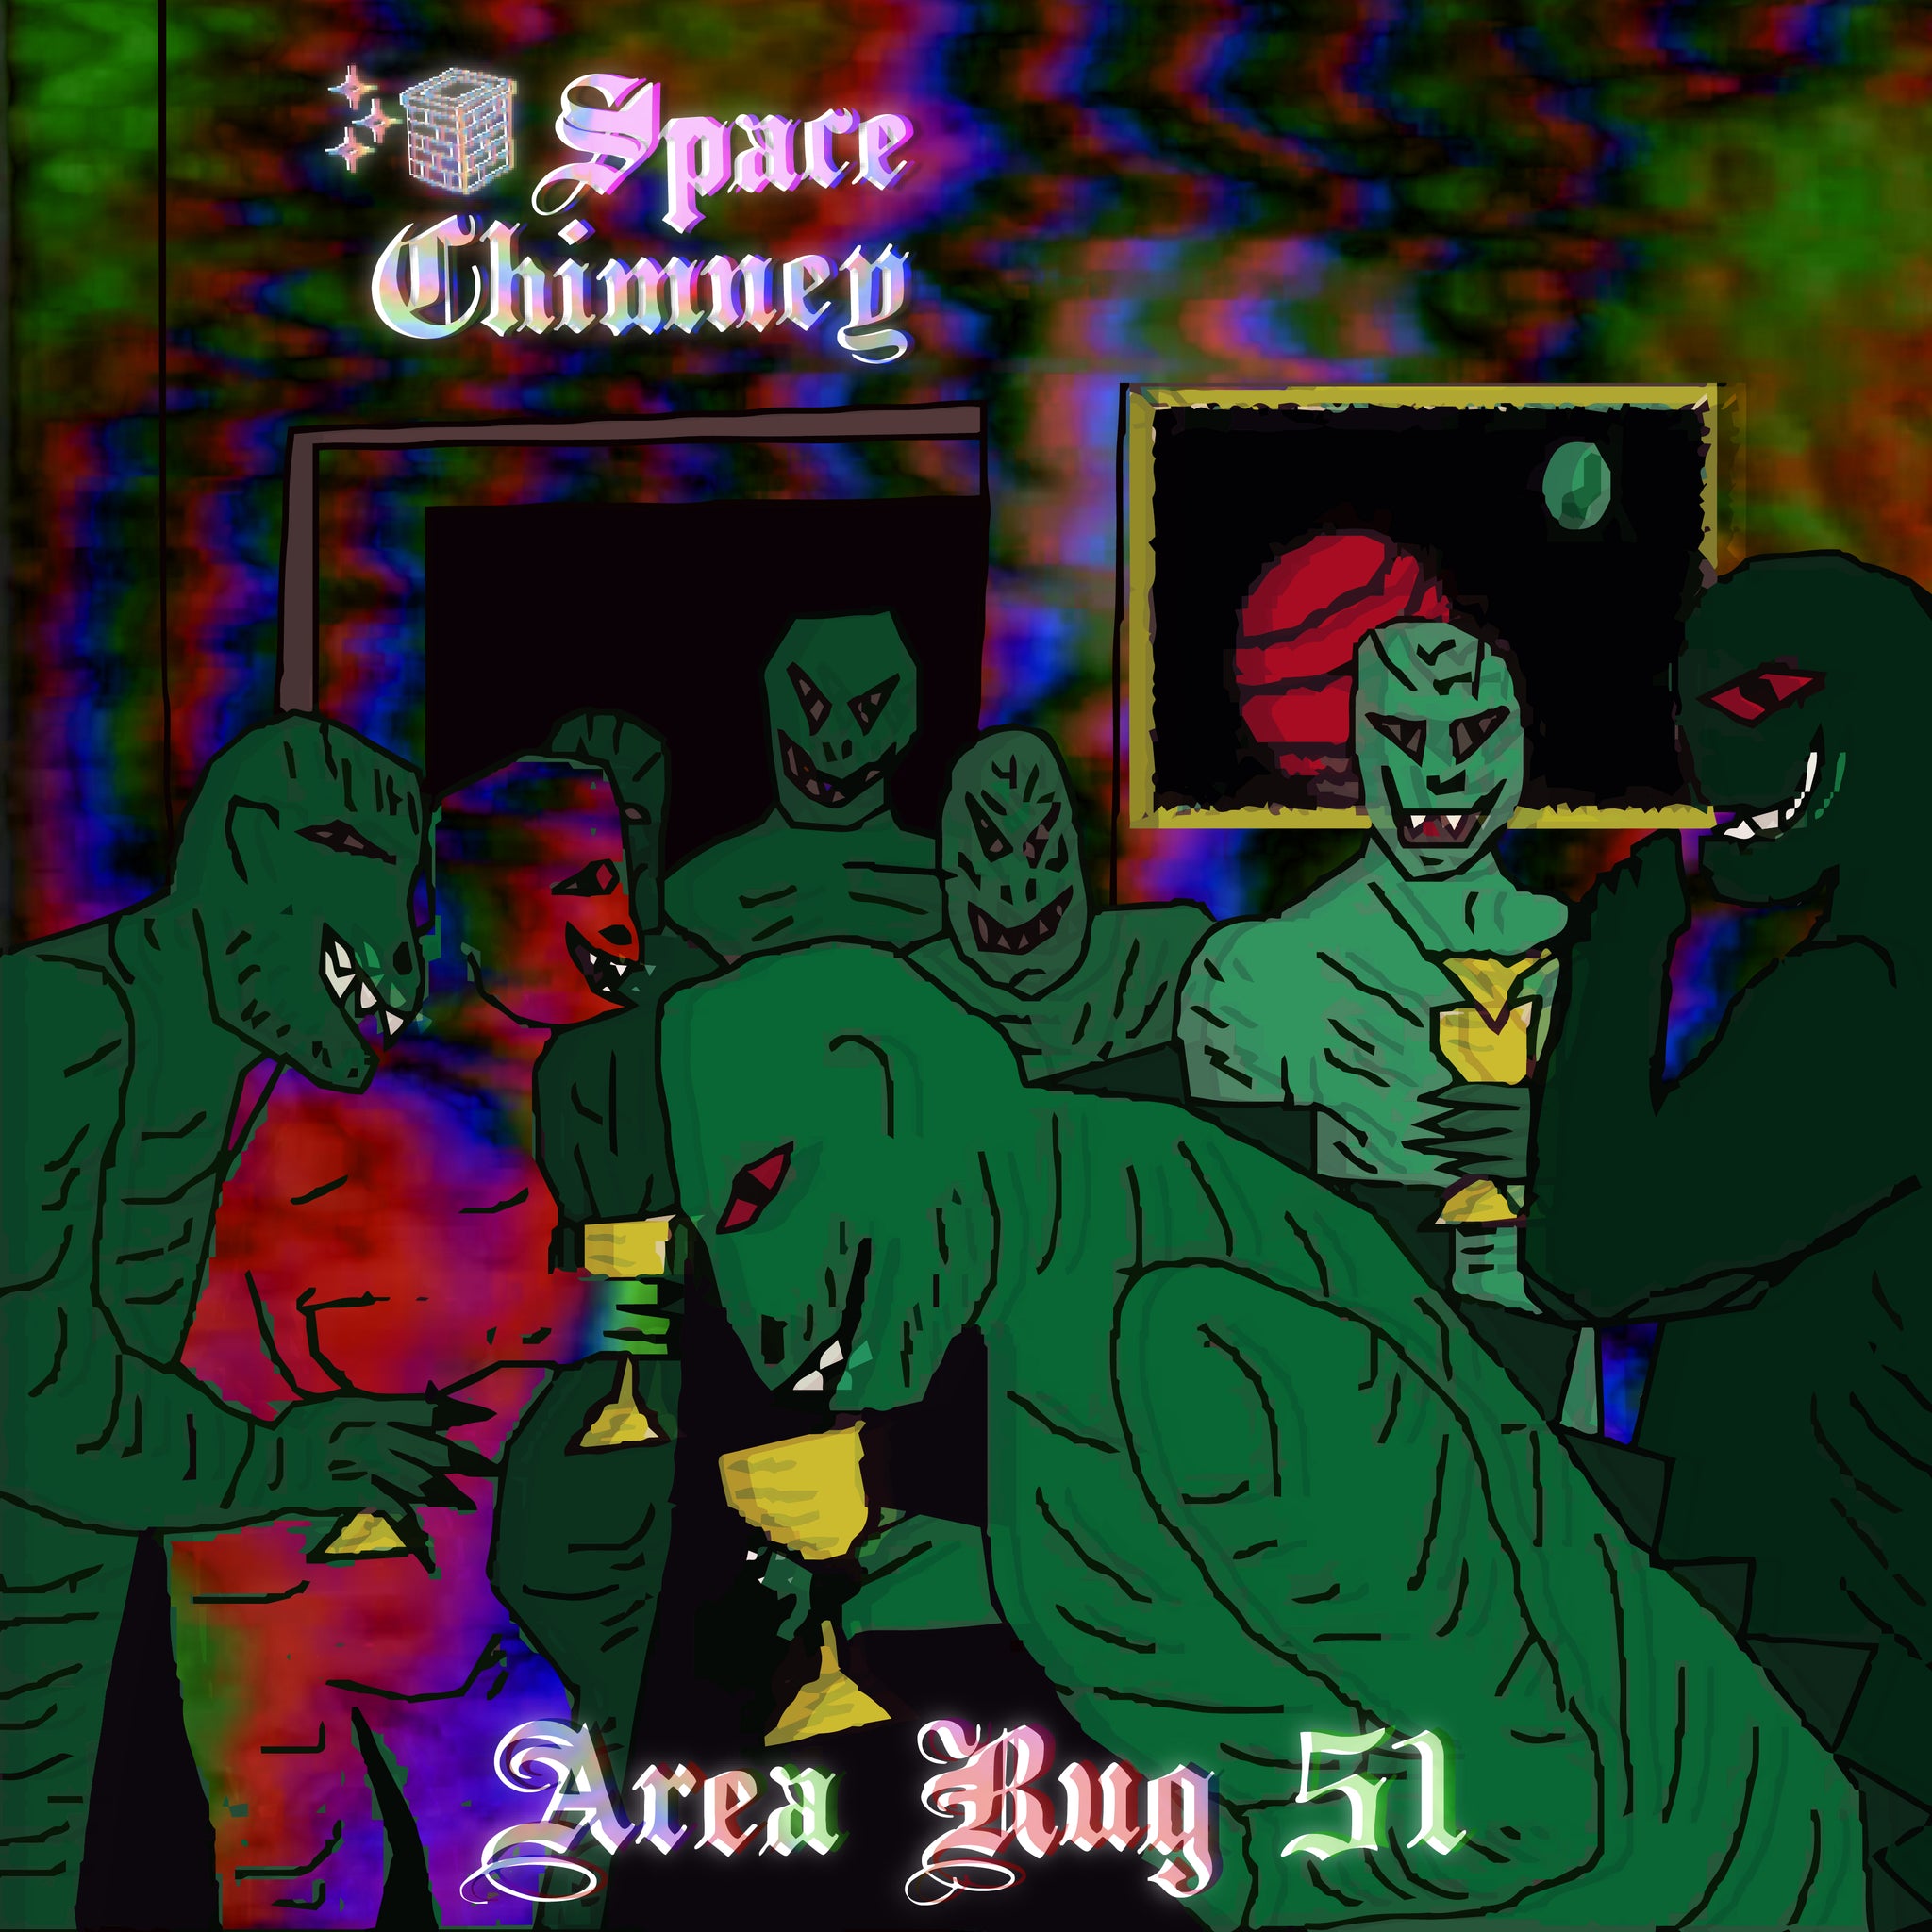 Space Chimney - Area Rug 51 (Digital)